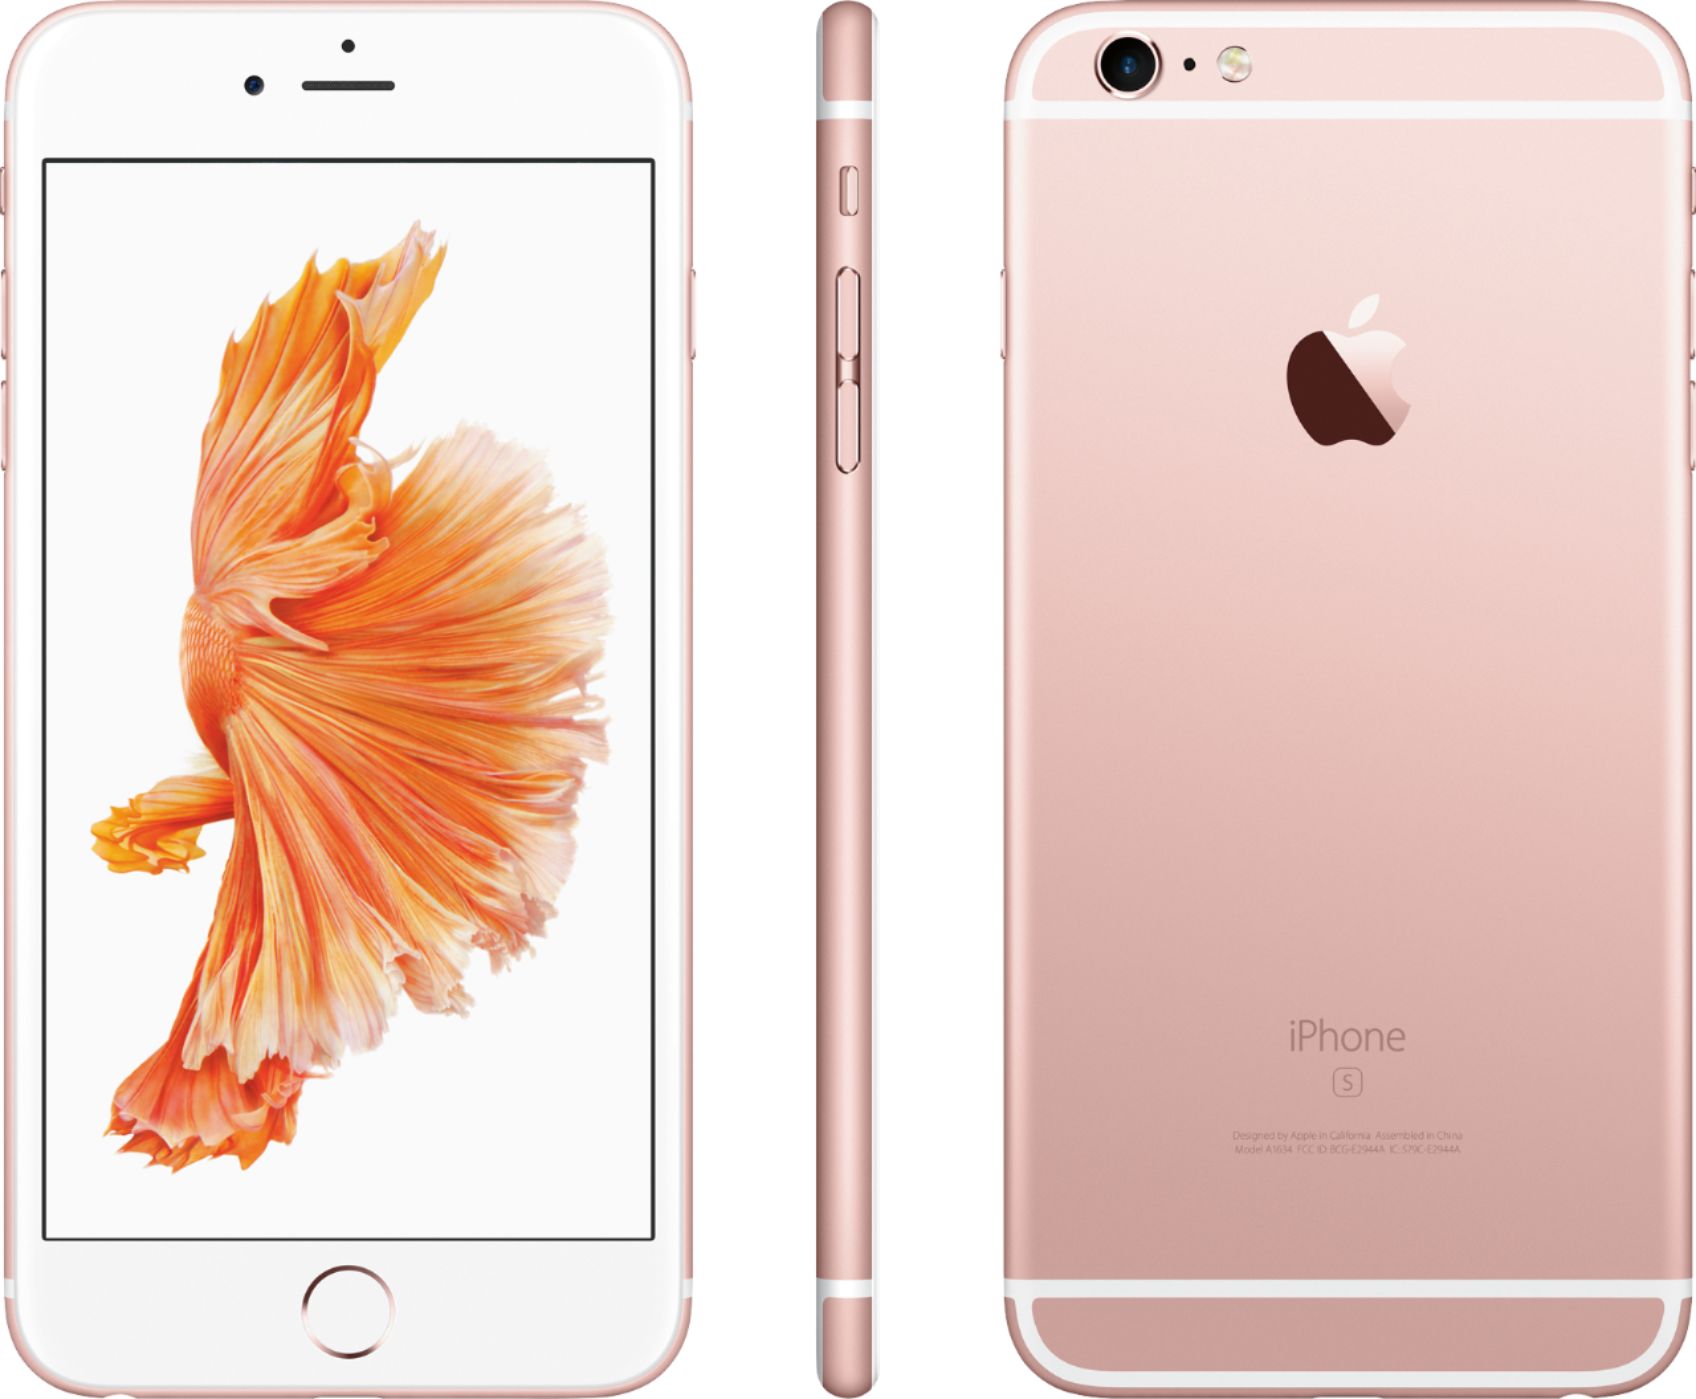 Apple iPhone 6s Plus 128GB Rose Gold (Sprint) MKWJ2LL/A